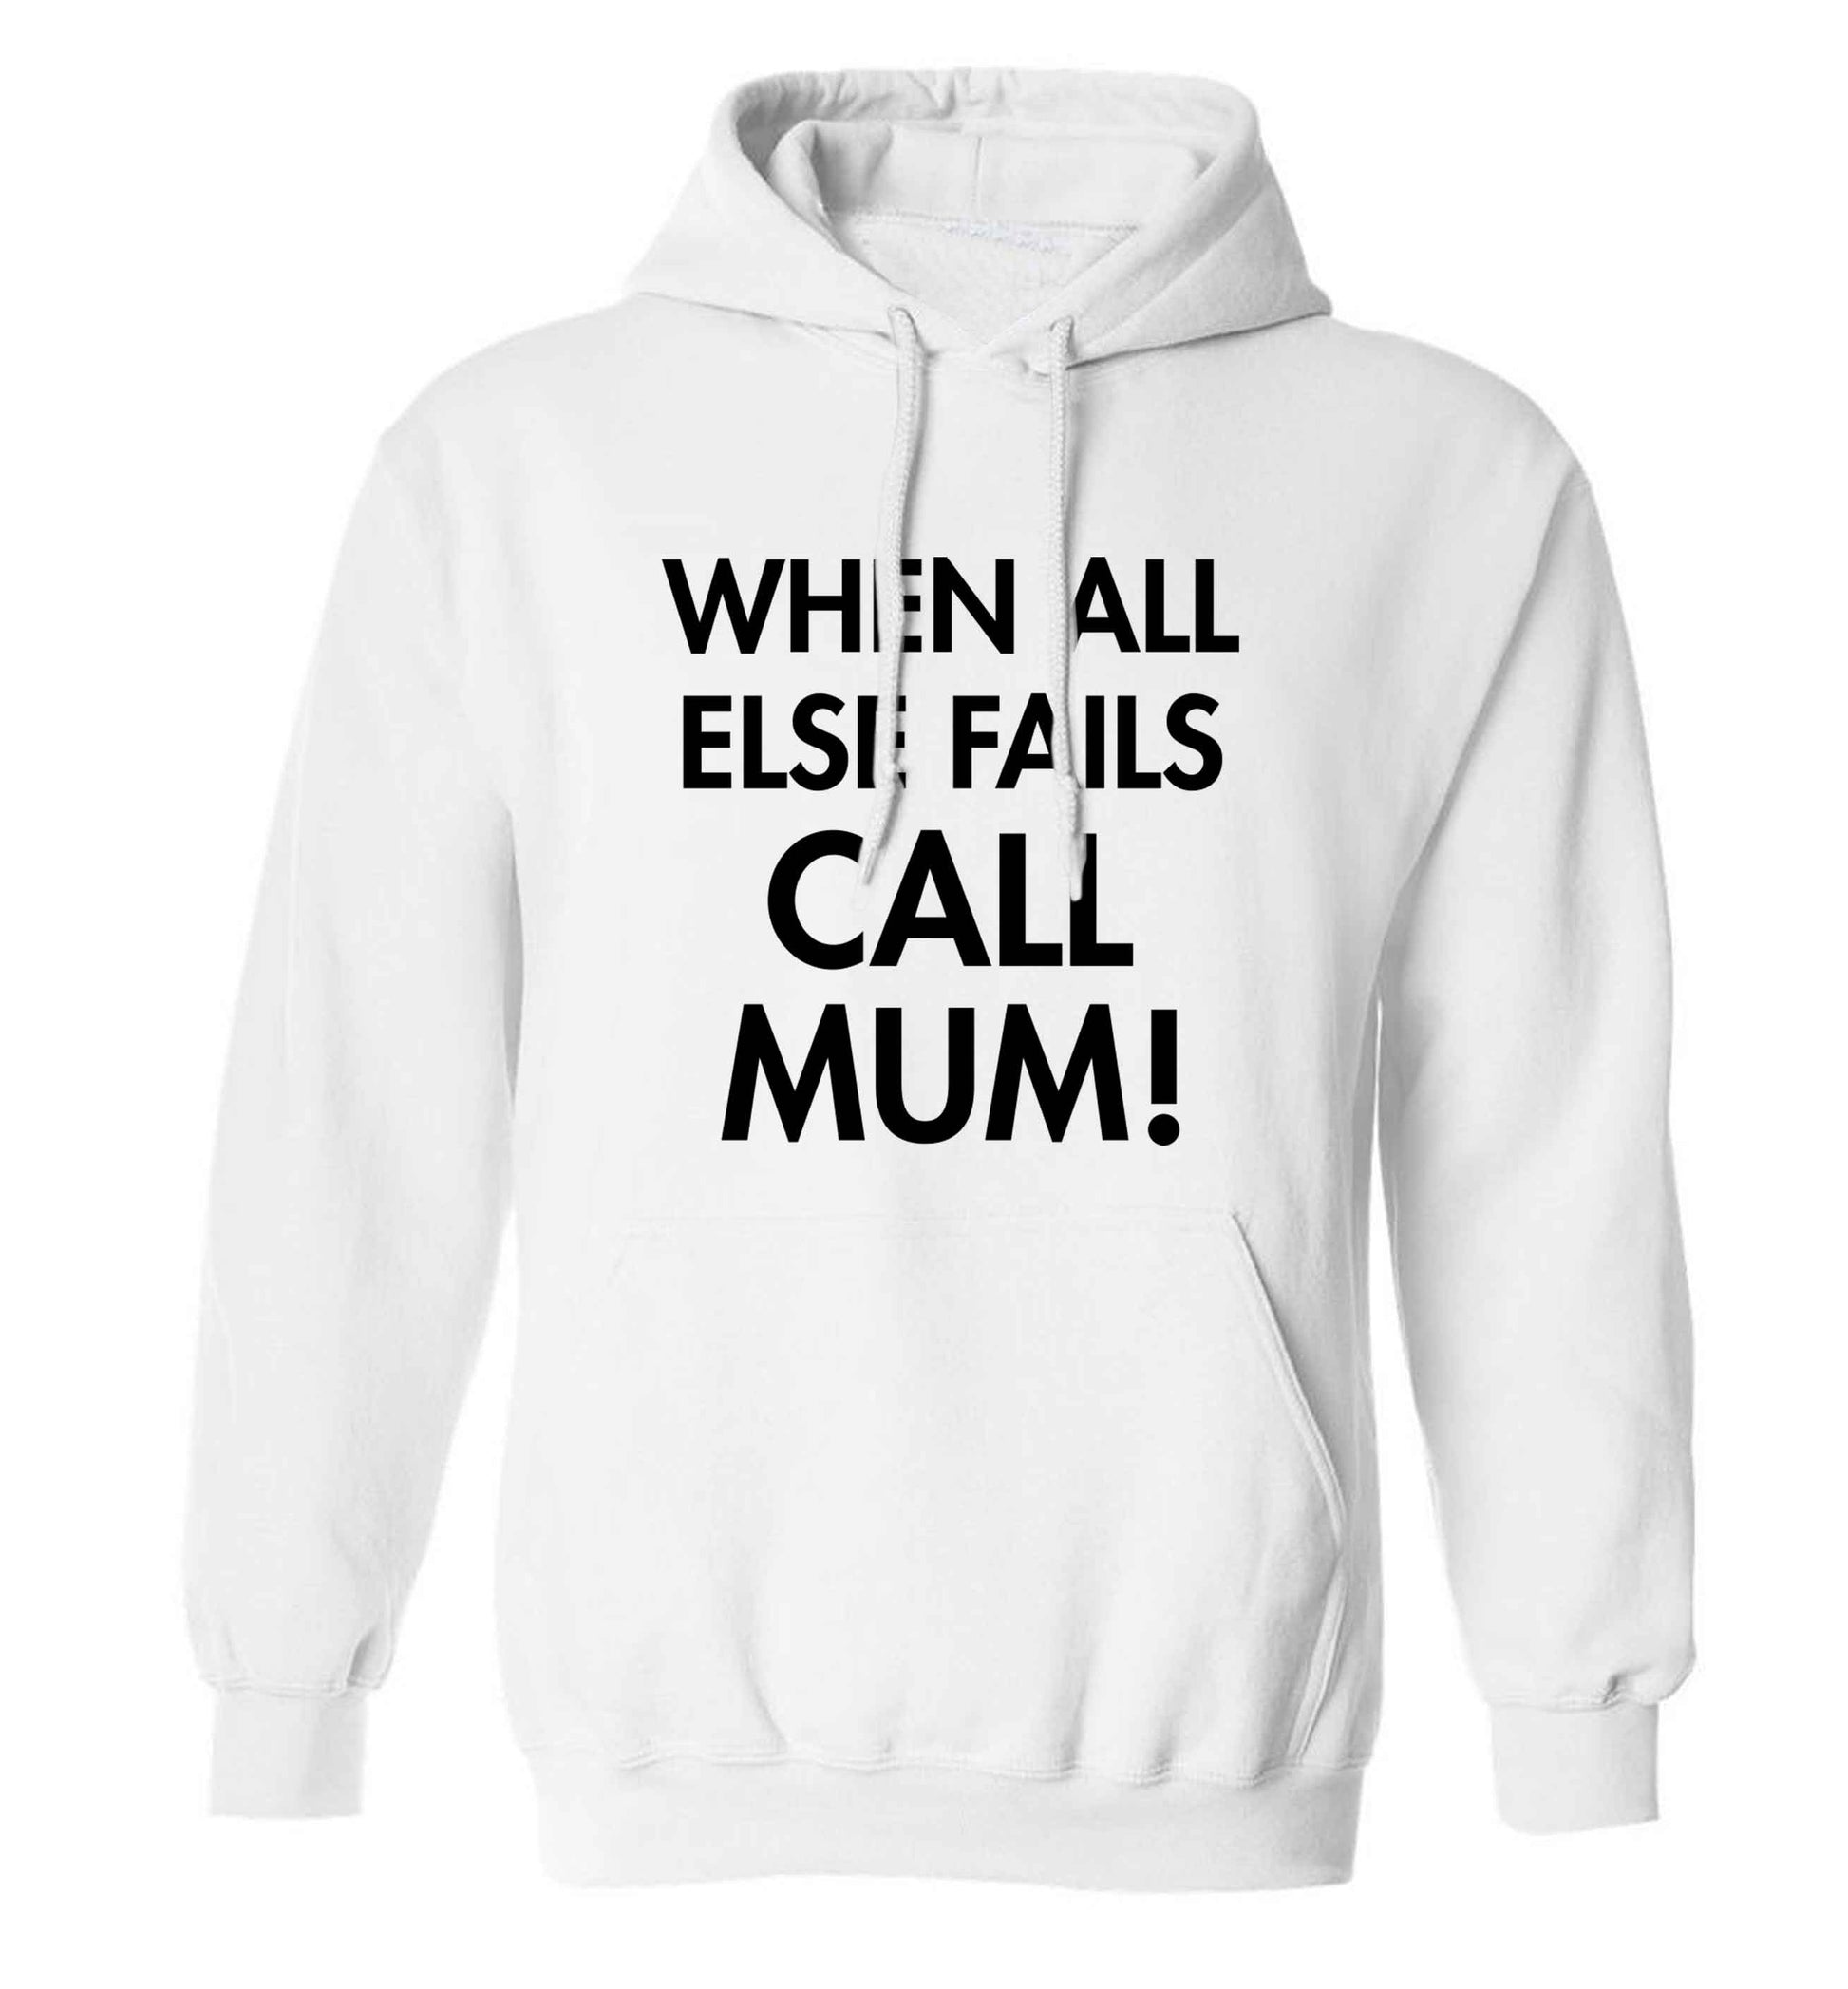 When all else fails call mum! adults unisex white hoodie 2XL